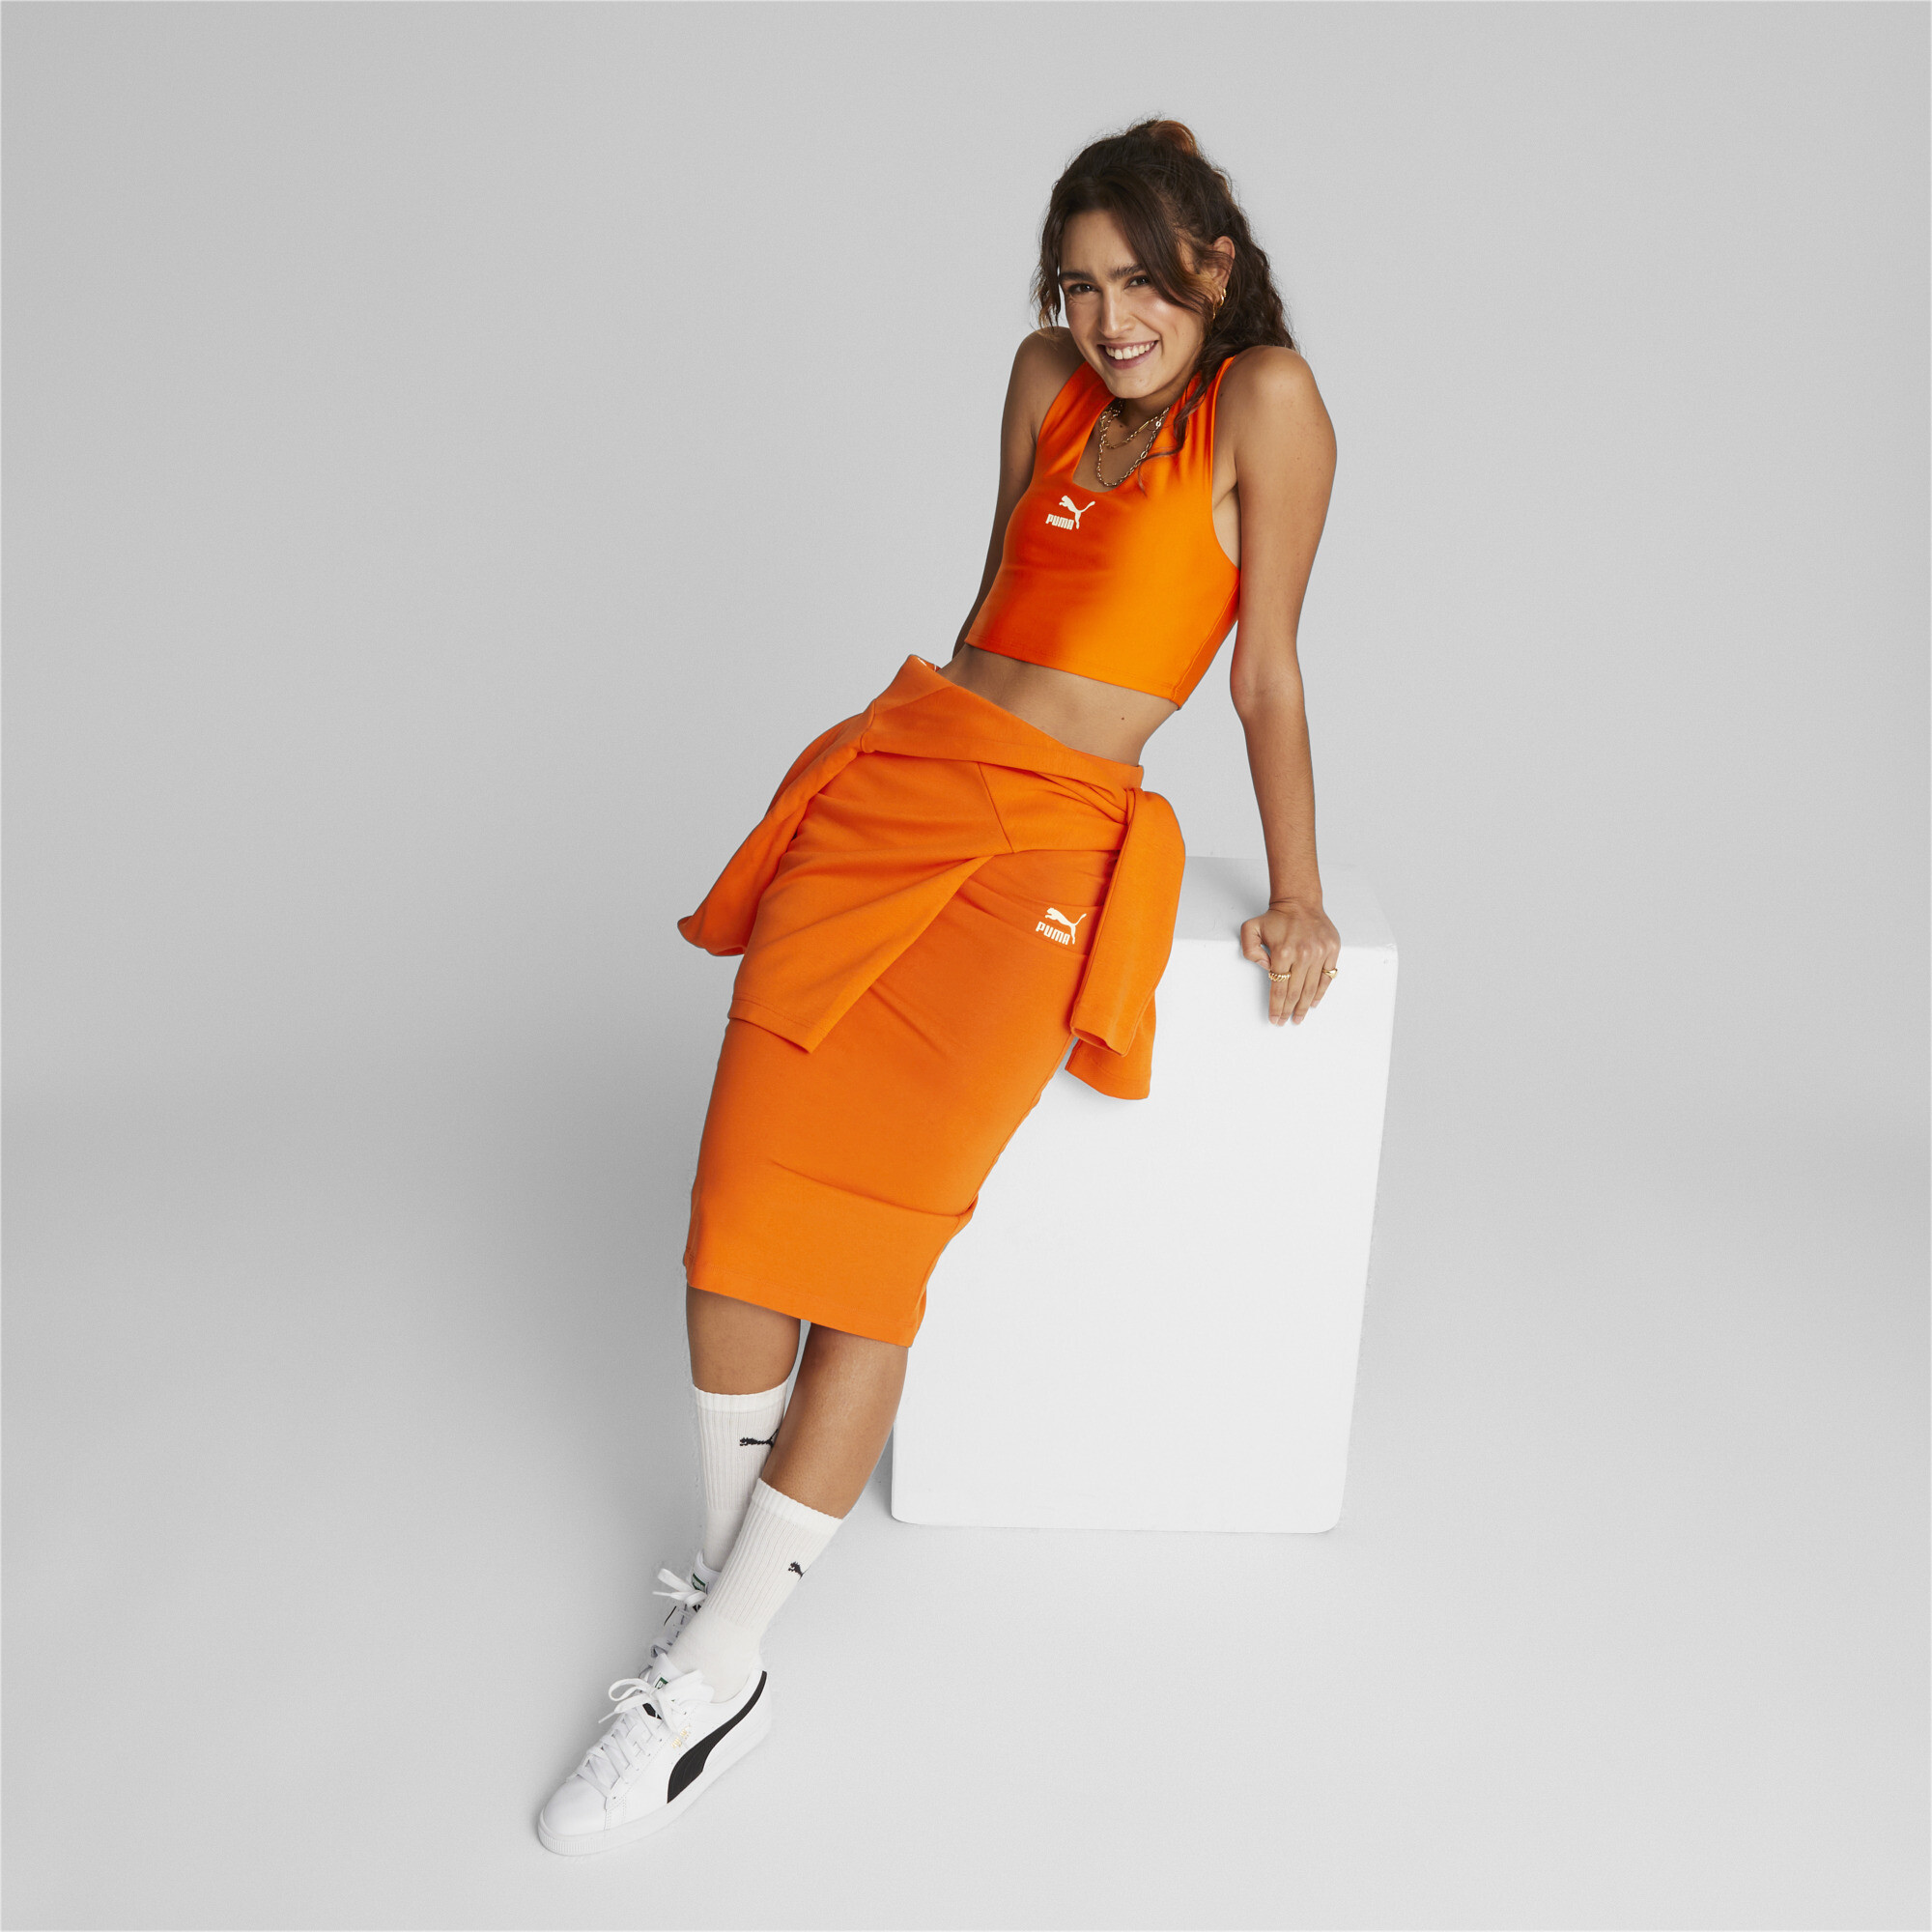 Women's Puma T7 Crop Top, Orange, Size XS, Clothing